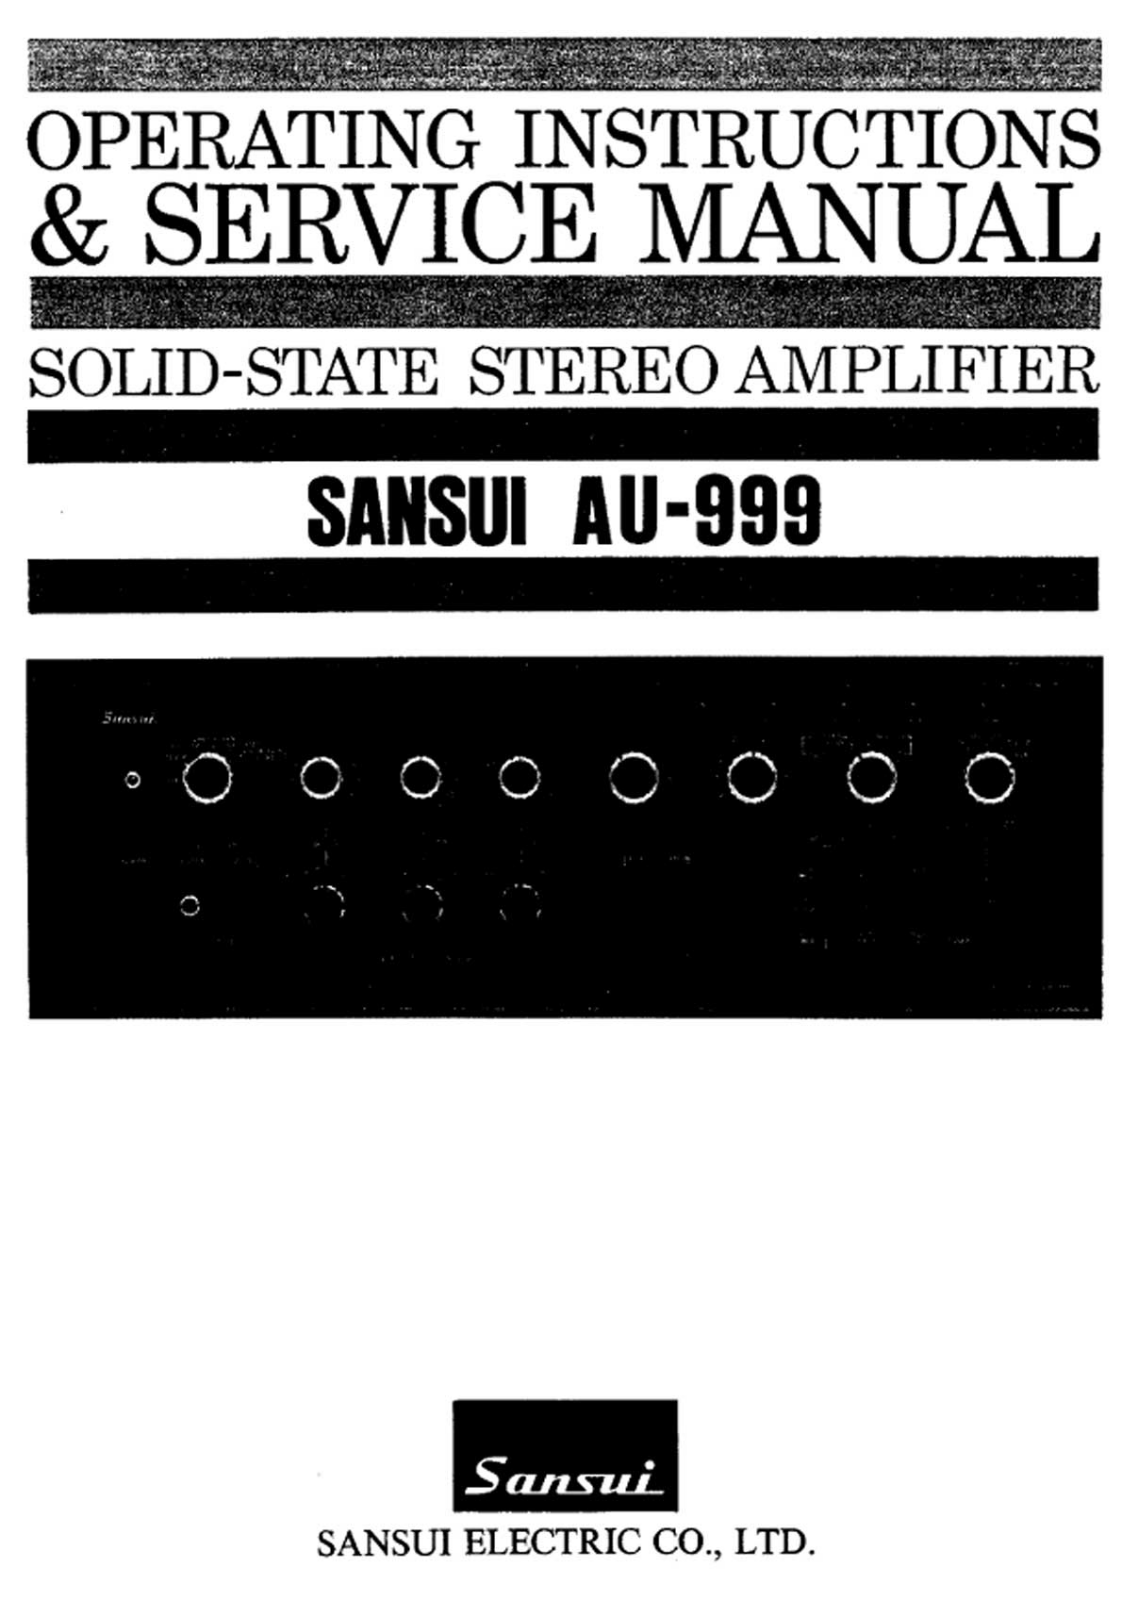 Sansui AU-999 Service manual